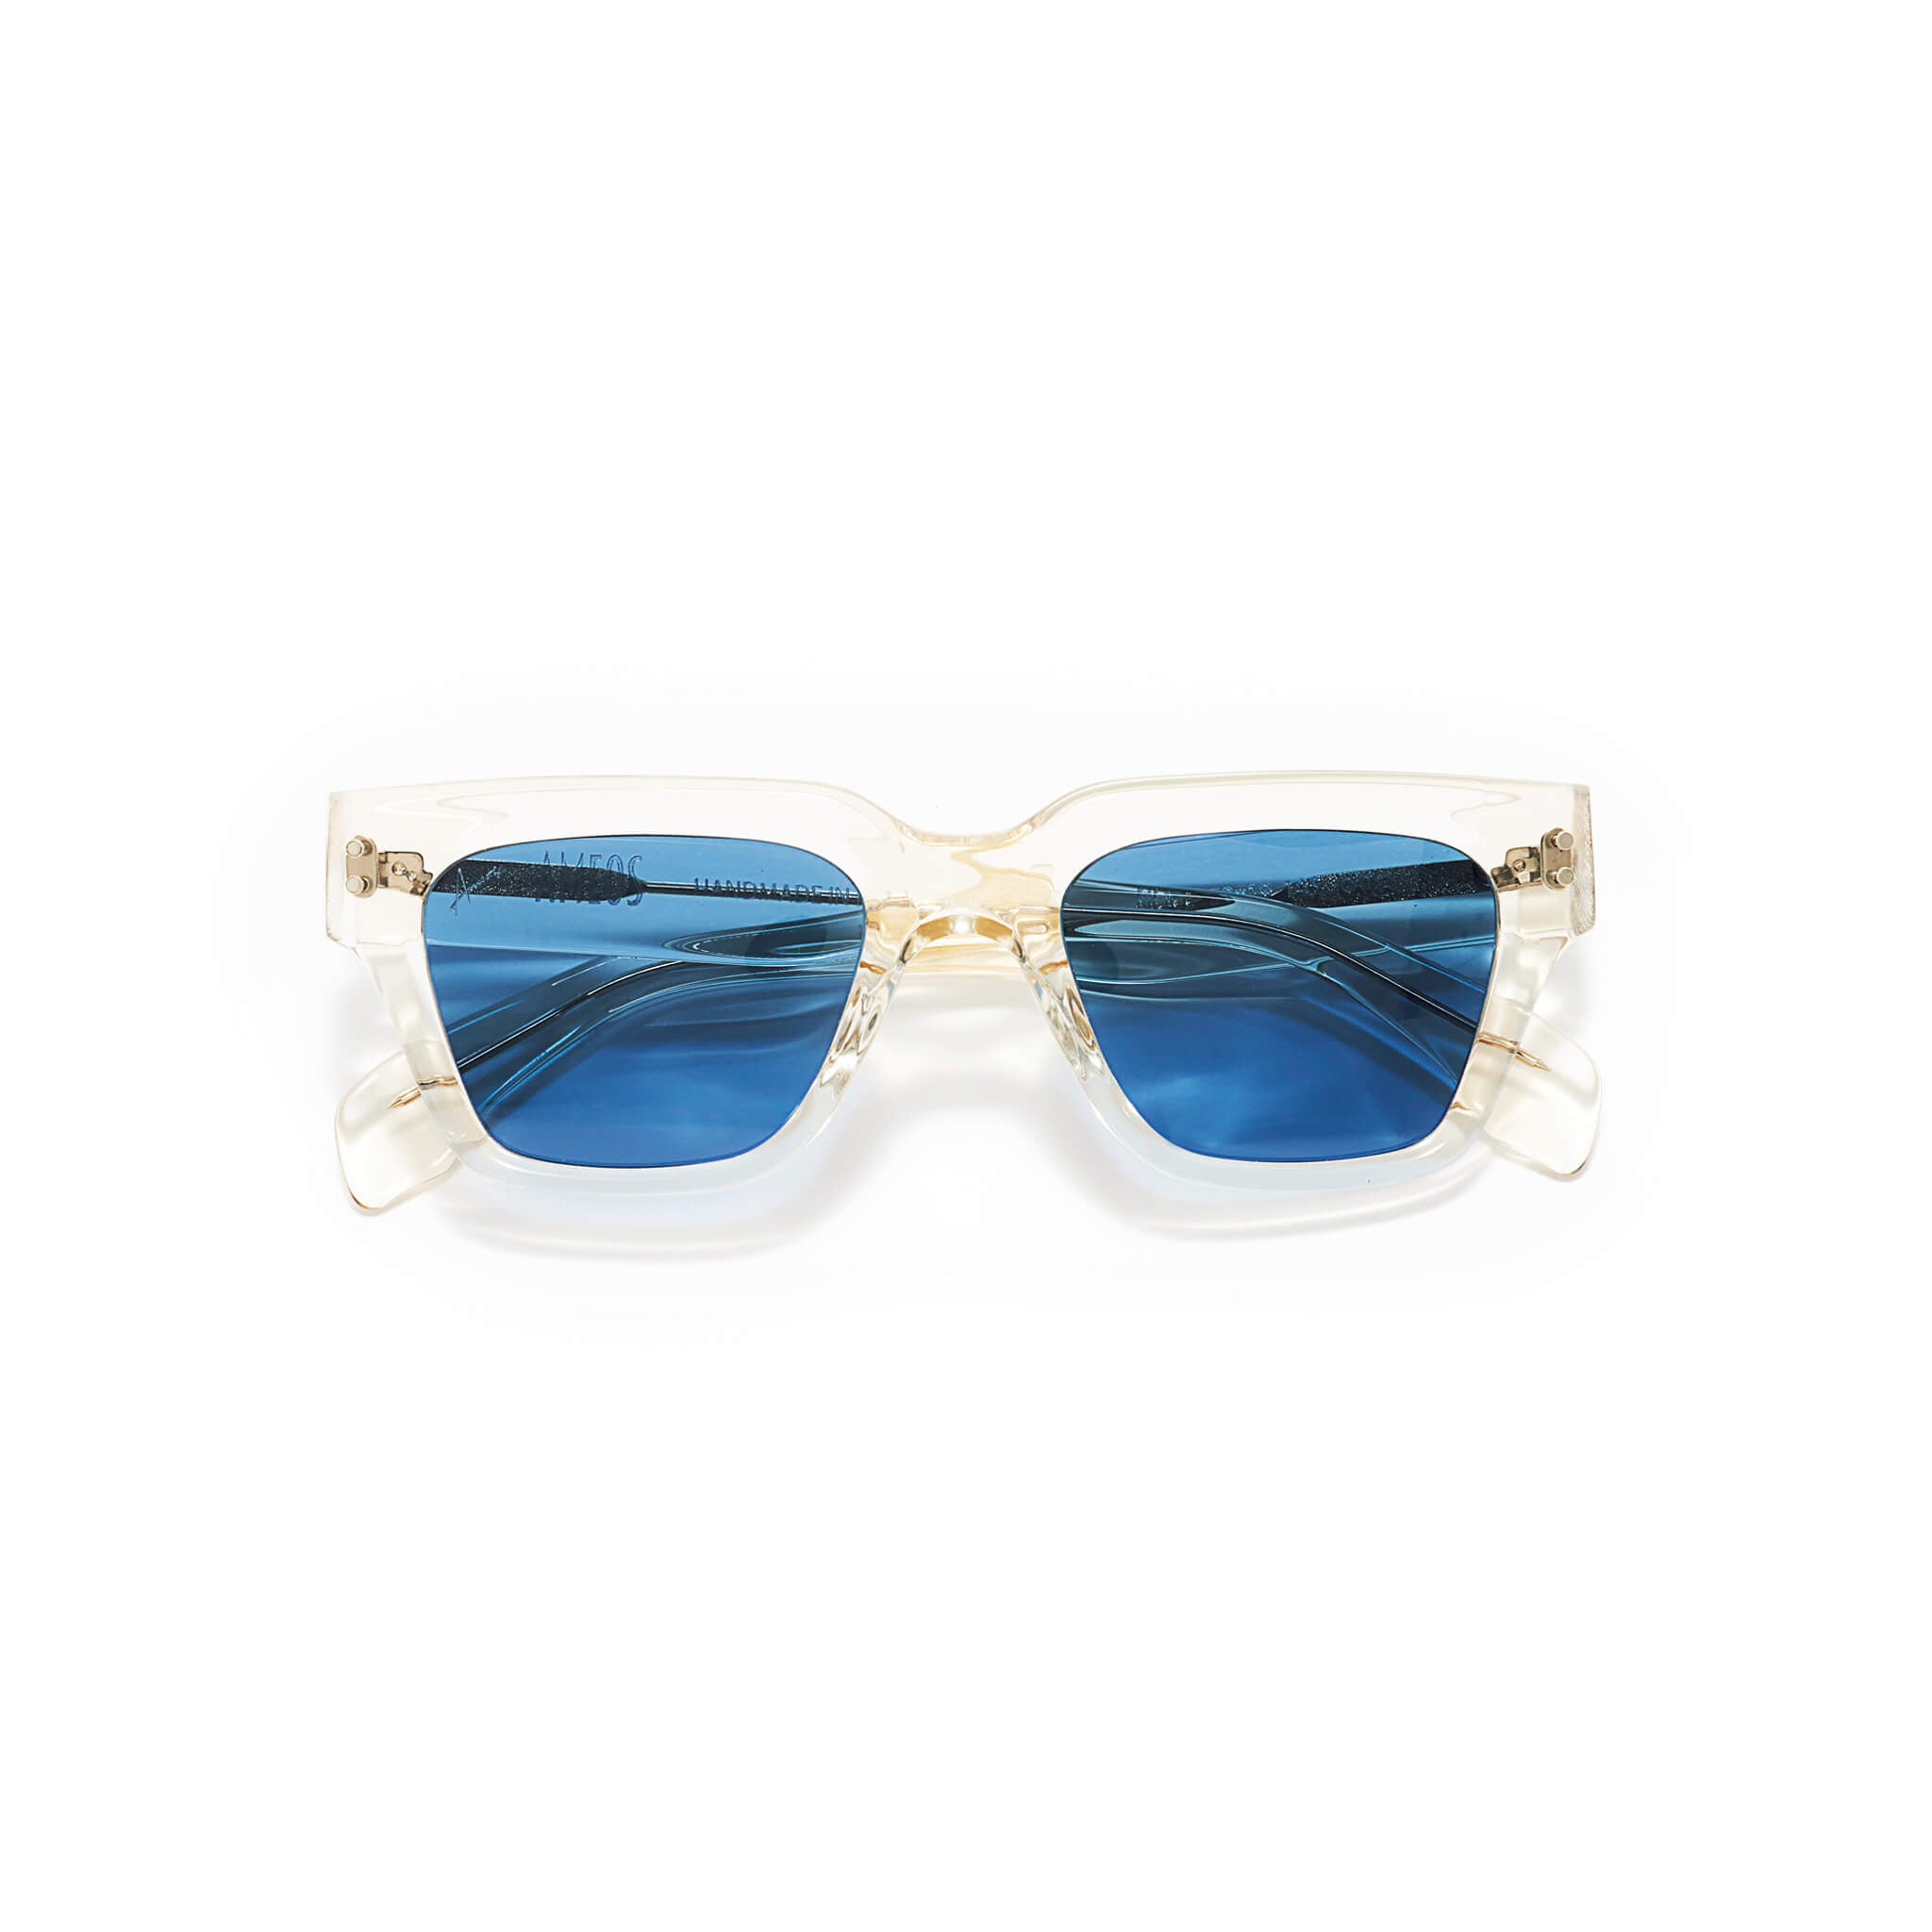 Transparent frames sunglasses with ocean blue lenses